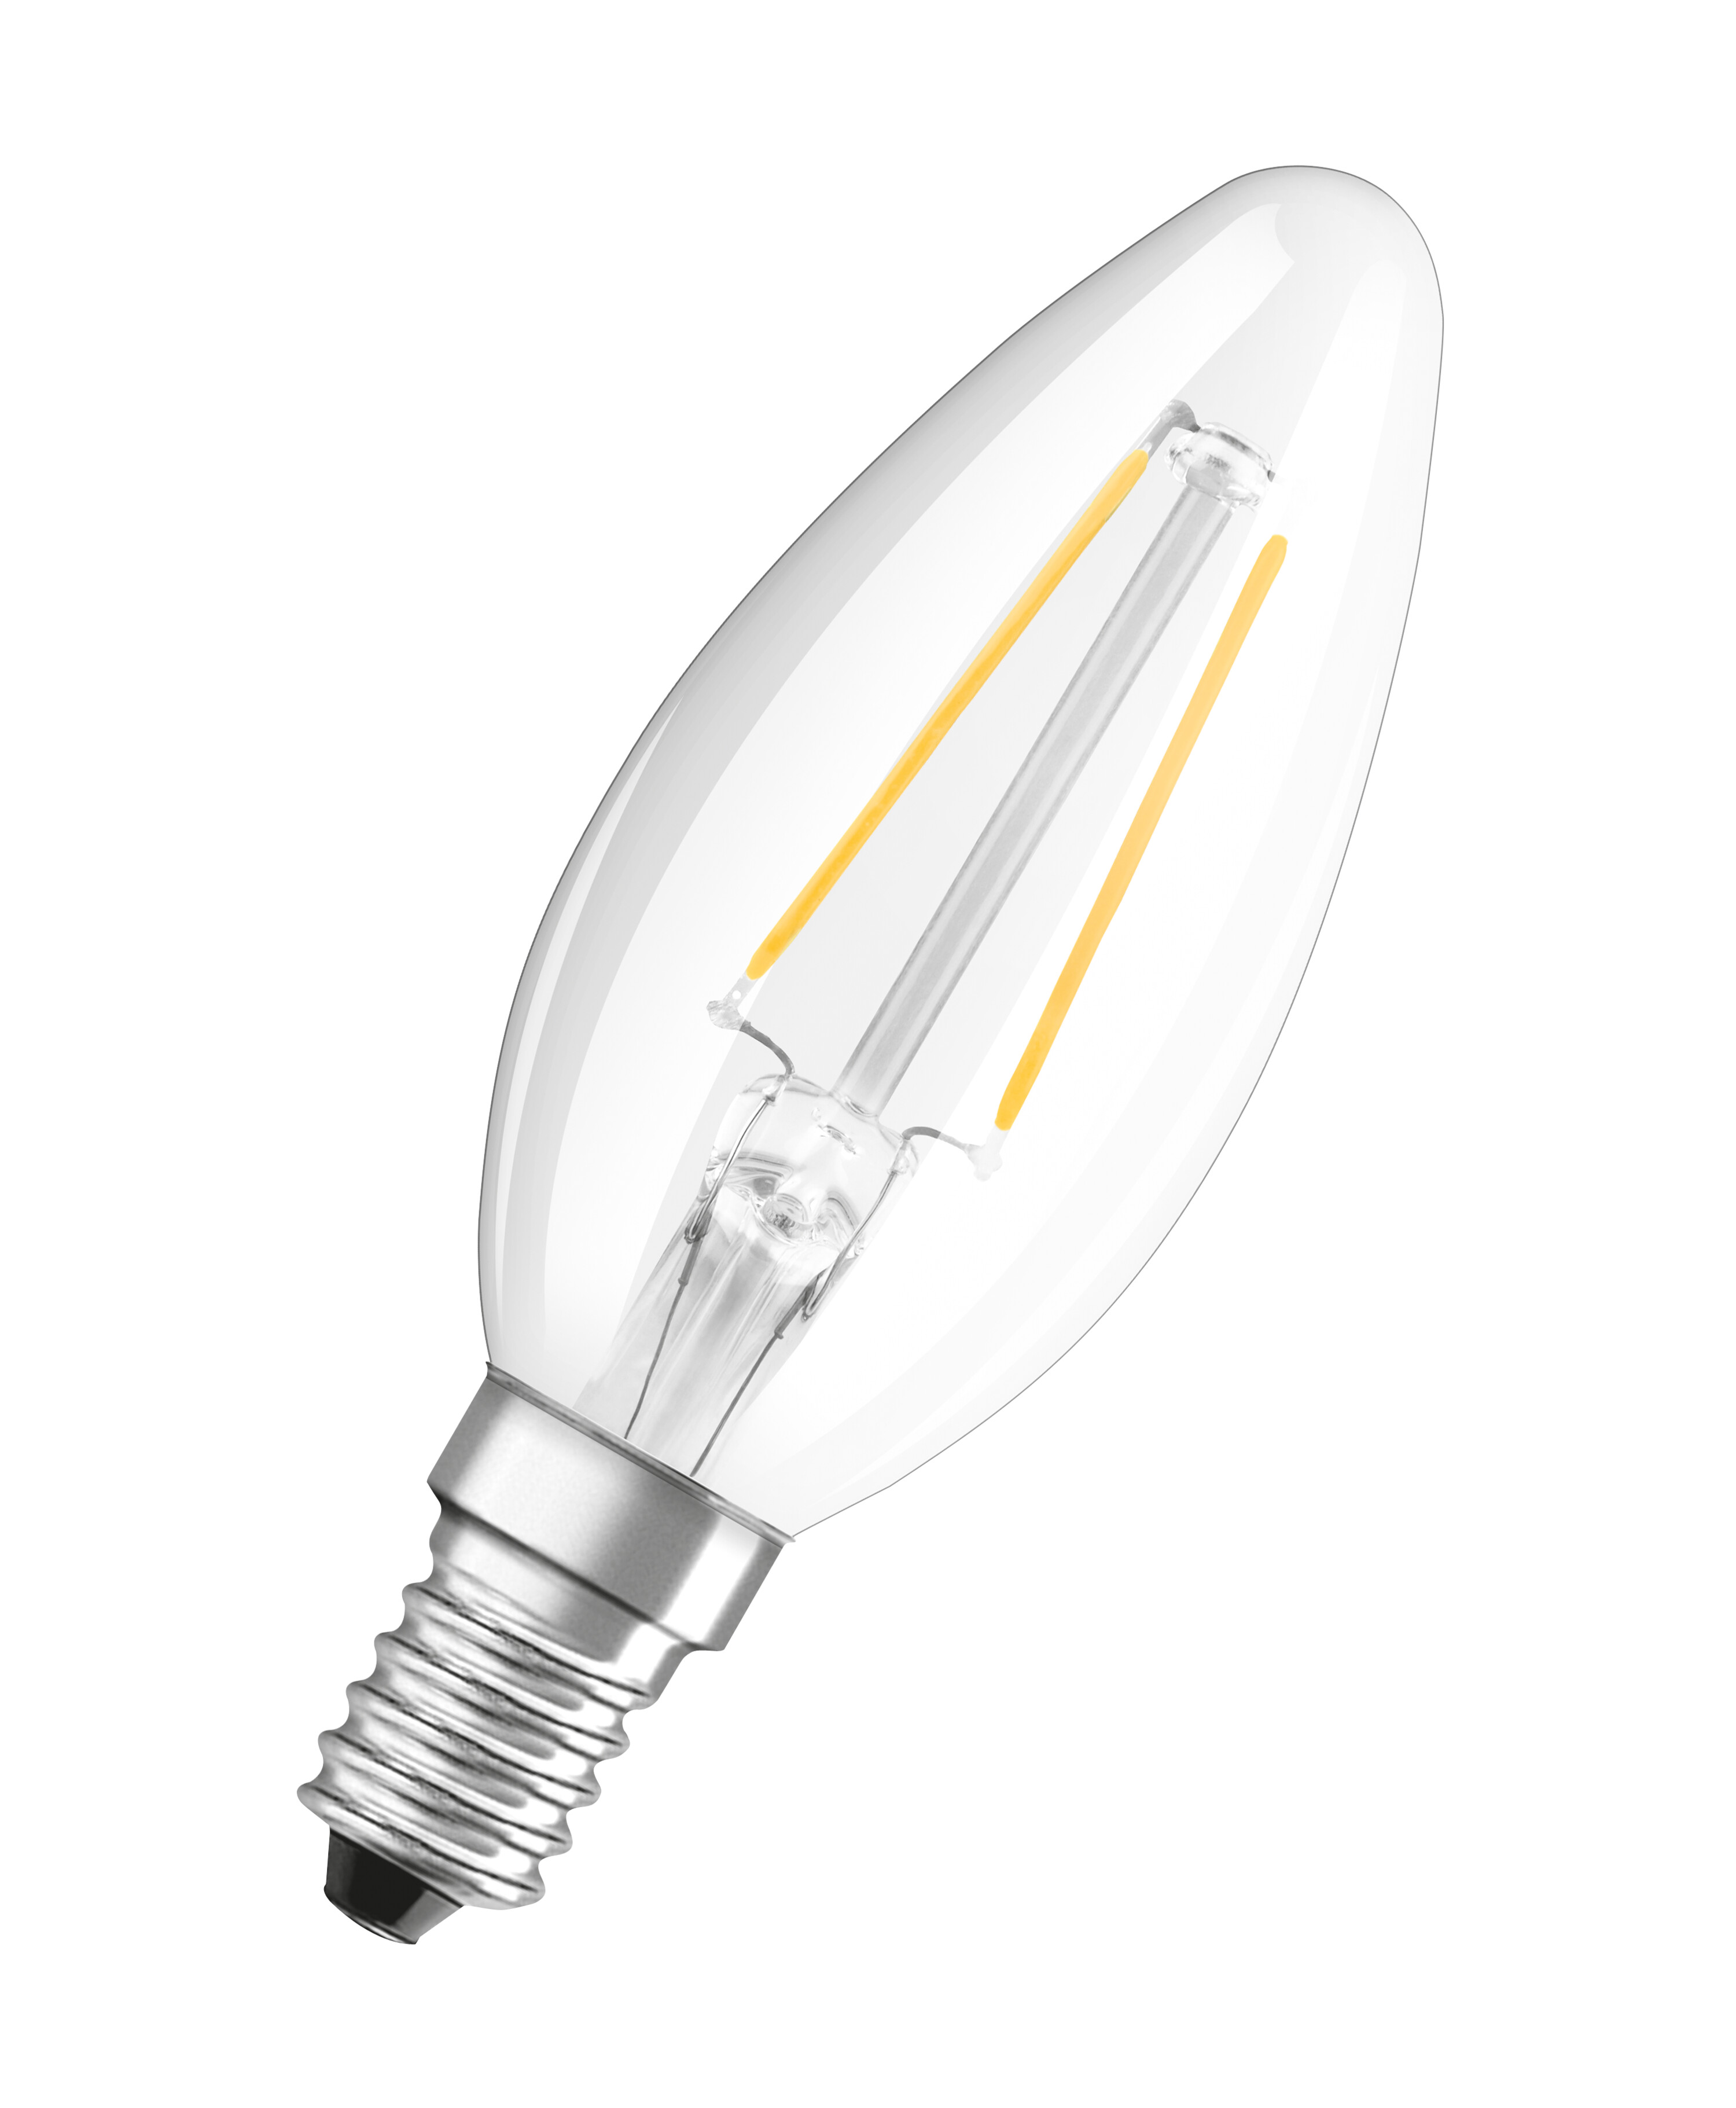 OSRAM  LED Retrofit CLASSIC 250 B Kaltweiß Lampe Lumen LED